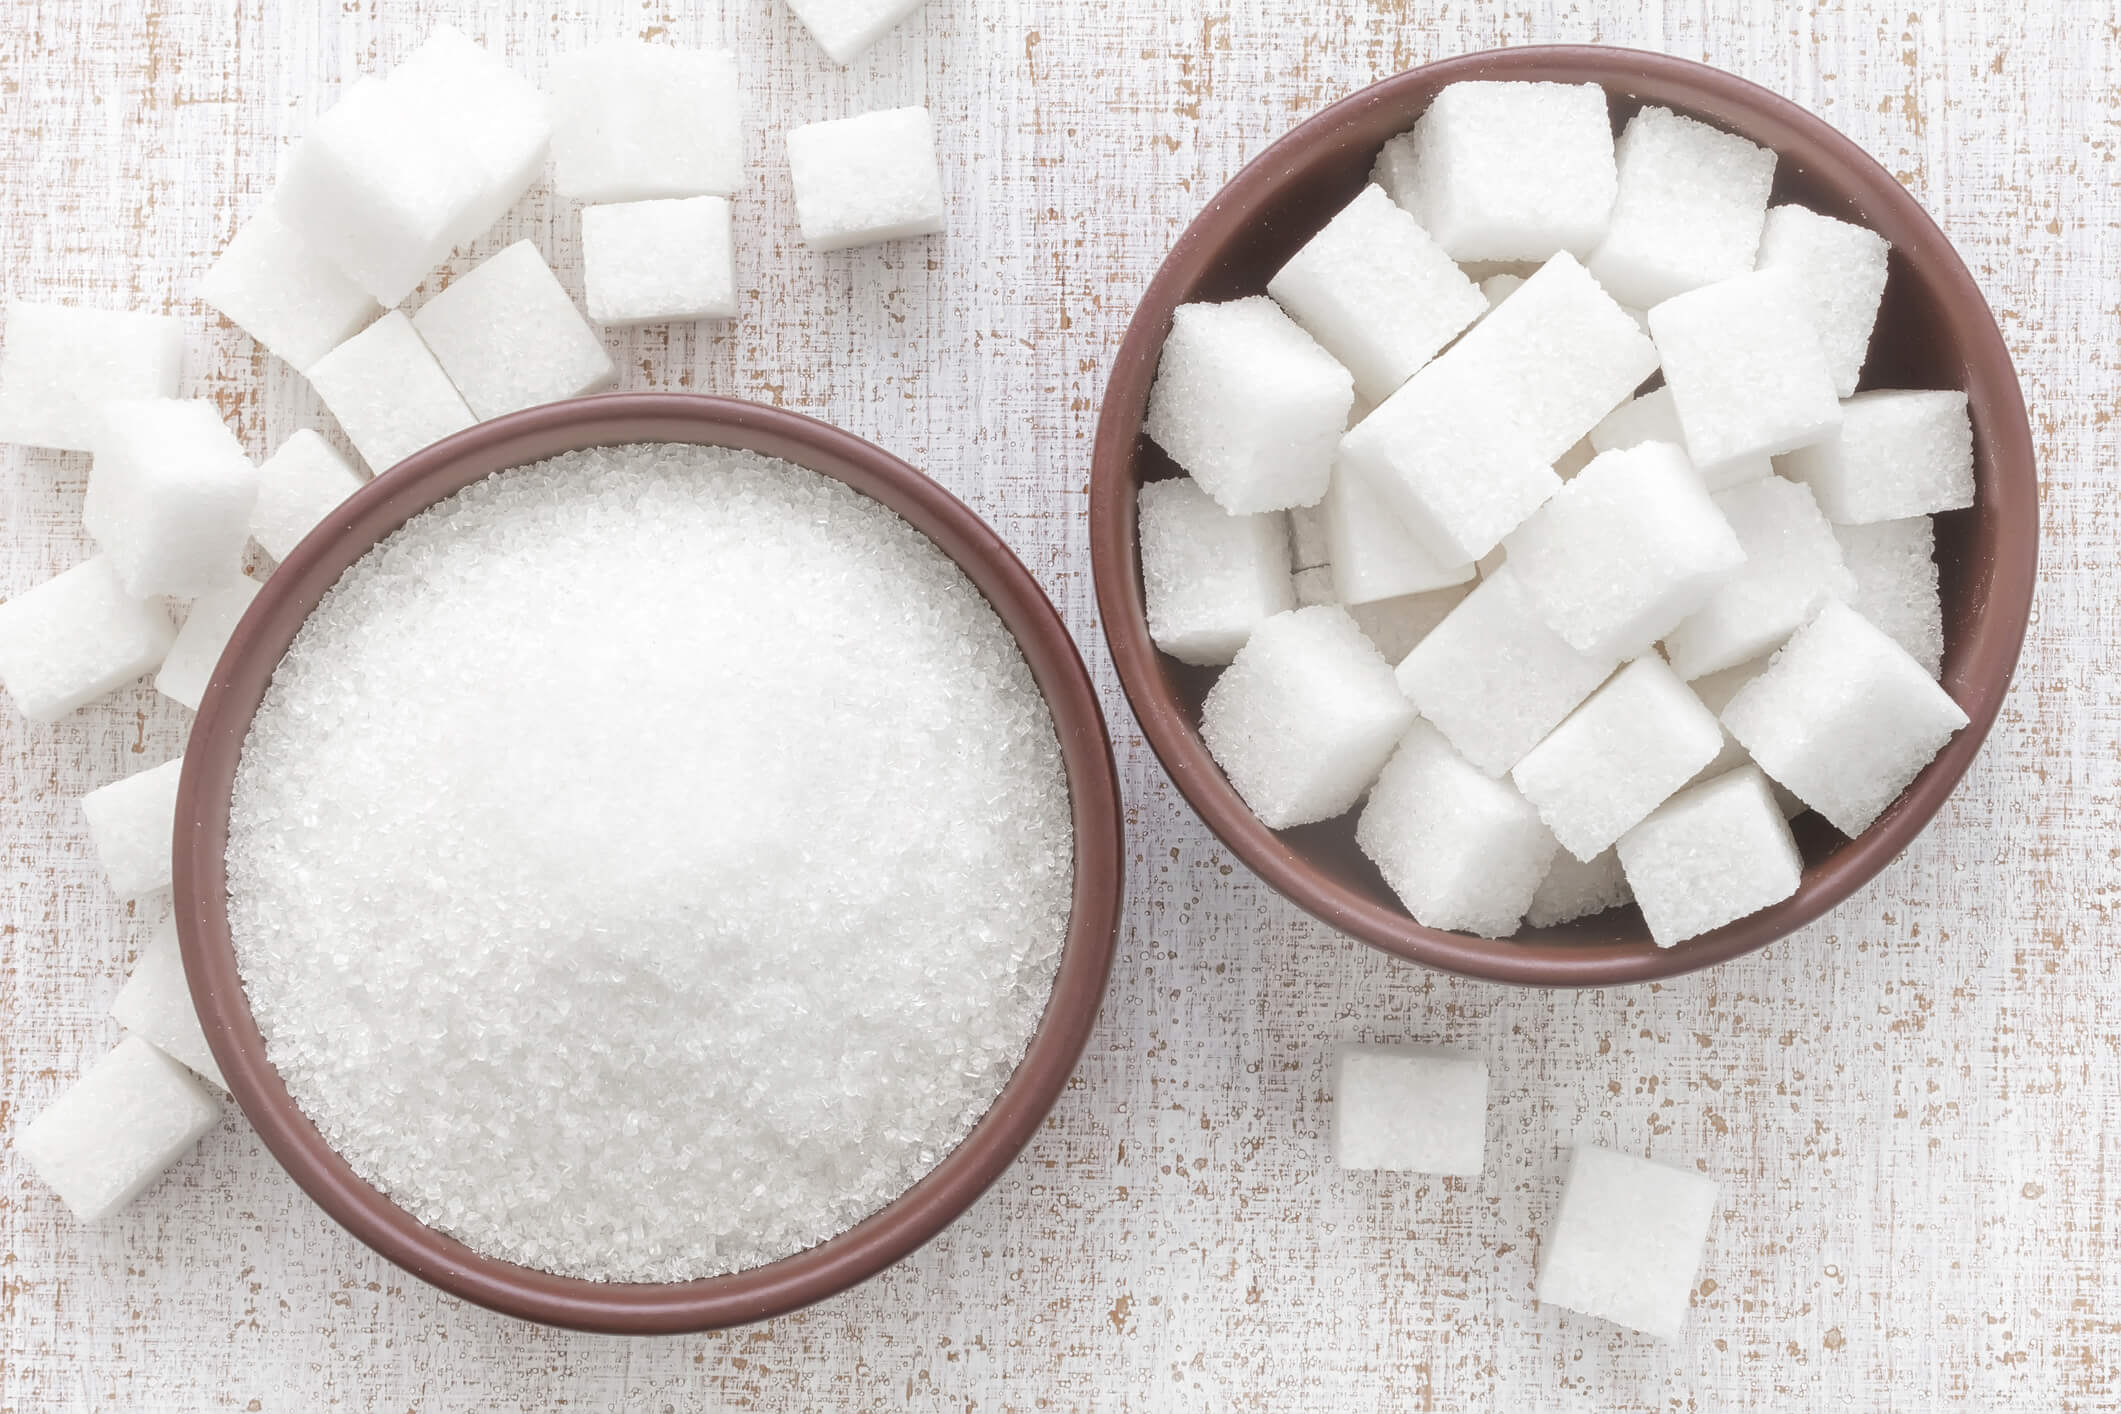 sukkerforbruk under fasting